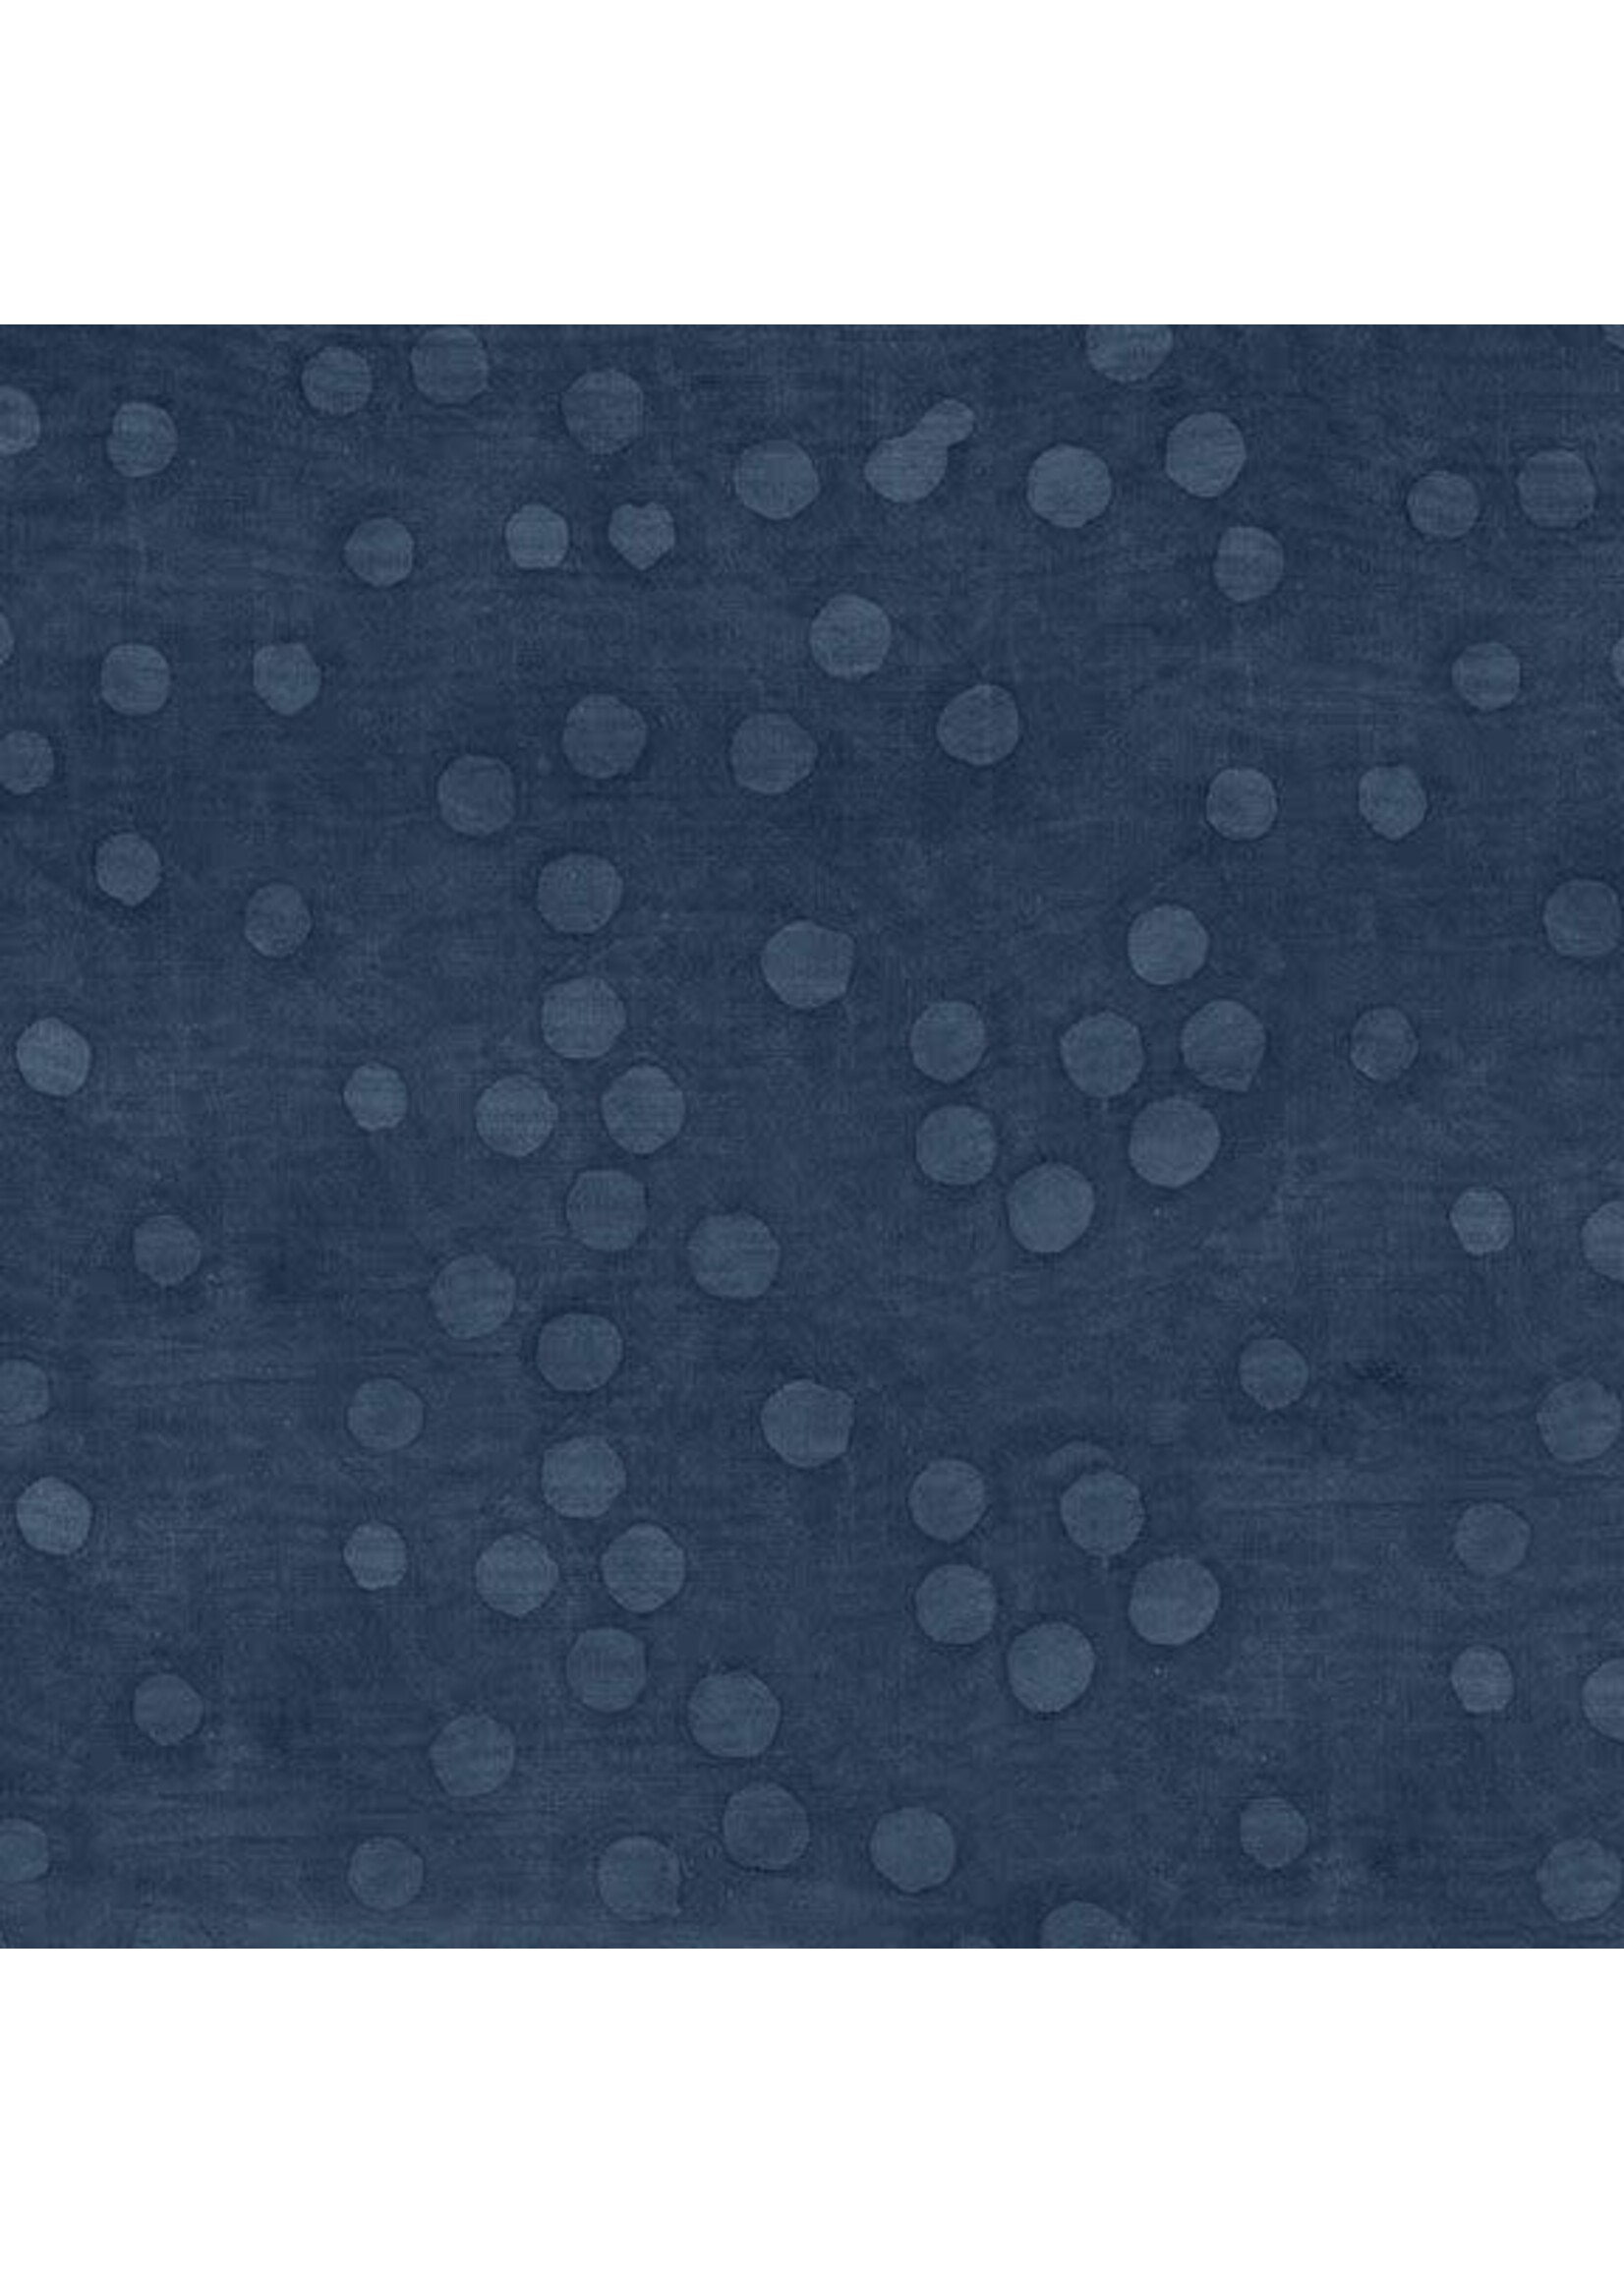 Marcus Fabrics Dapple Dots - Teal - 60571